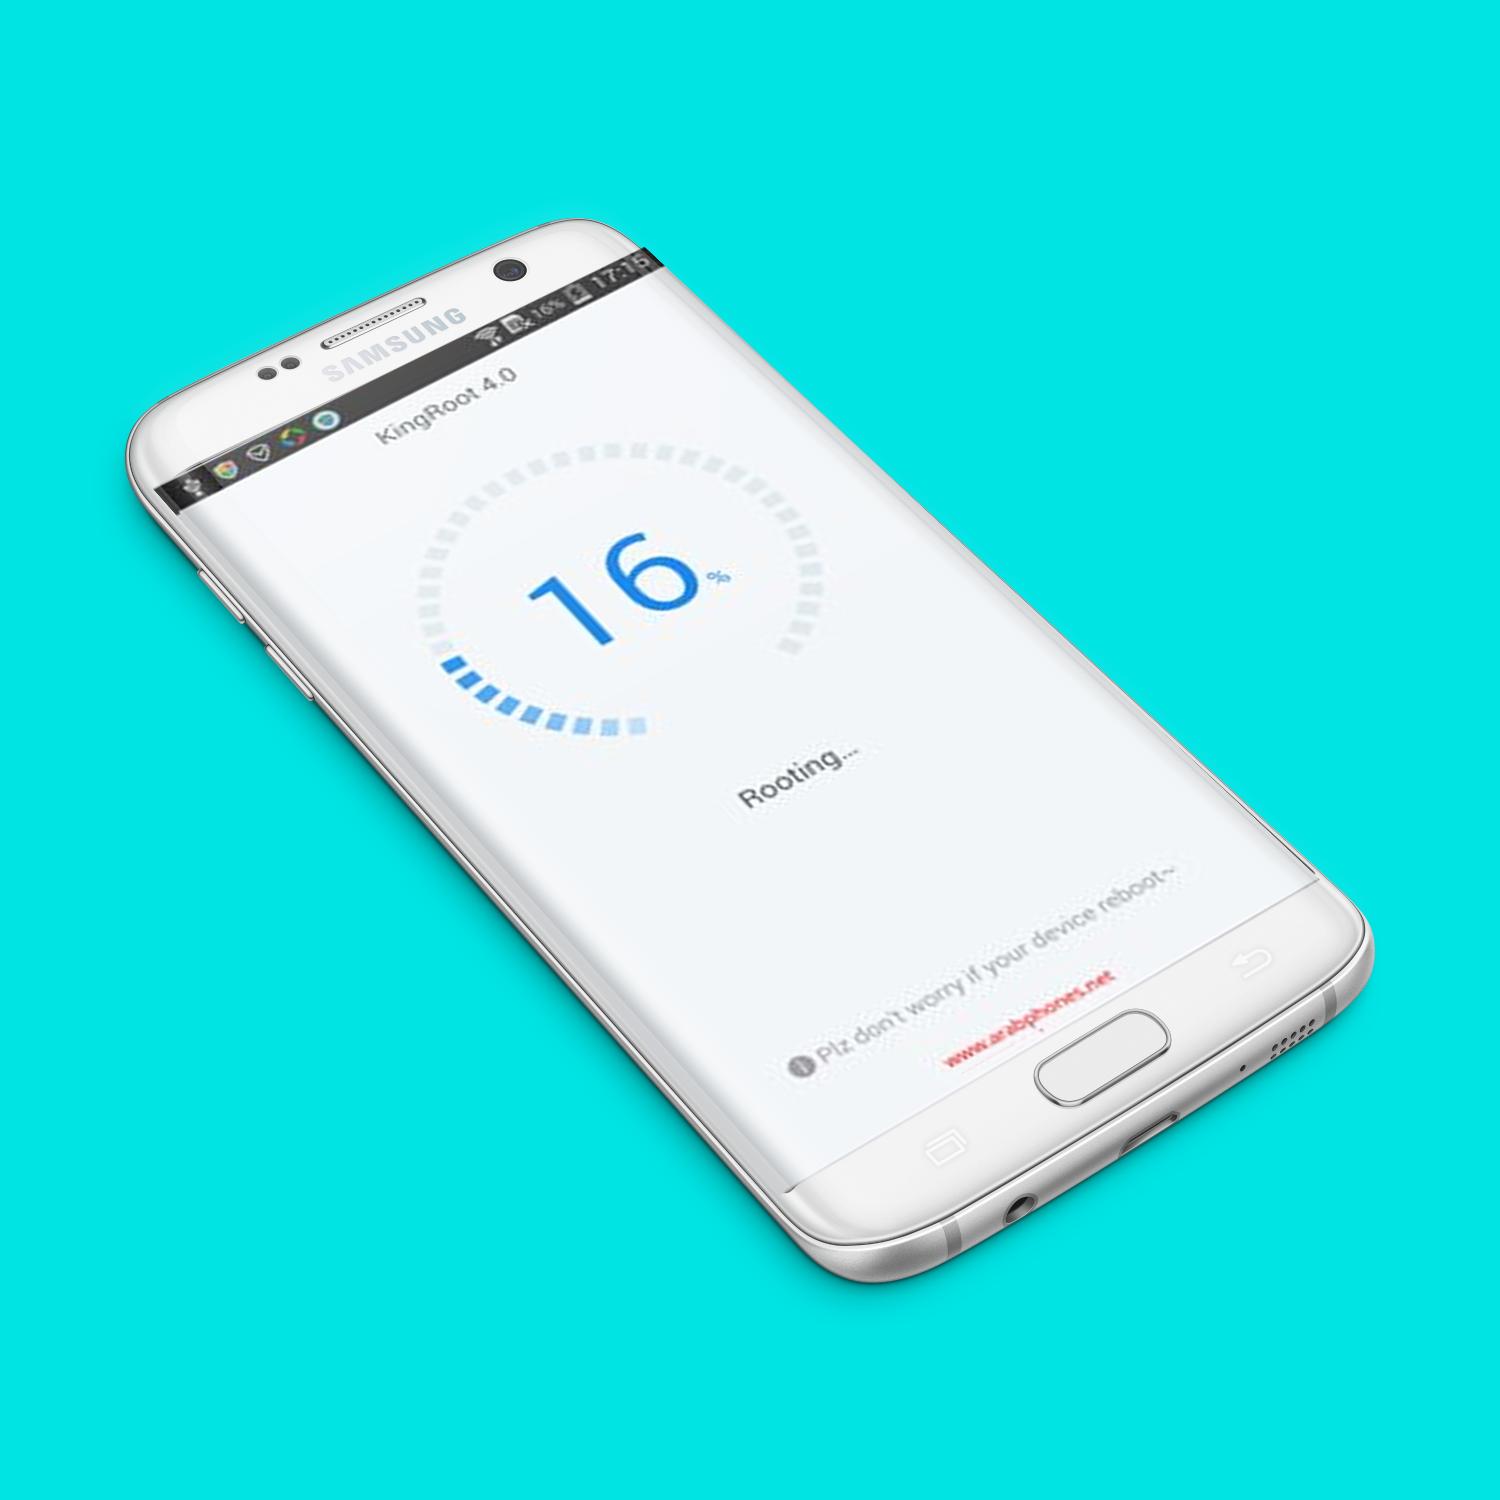 Samsung Android 22. Самсунг 11 версия андроид. Vphonegaga gold